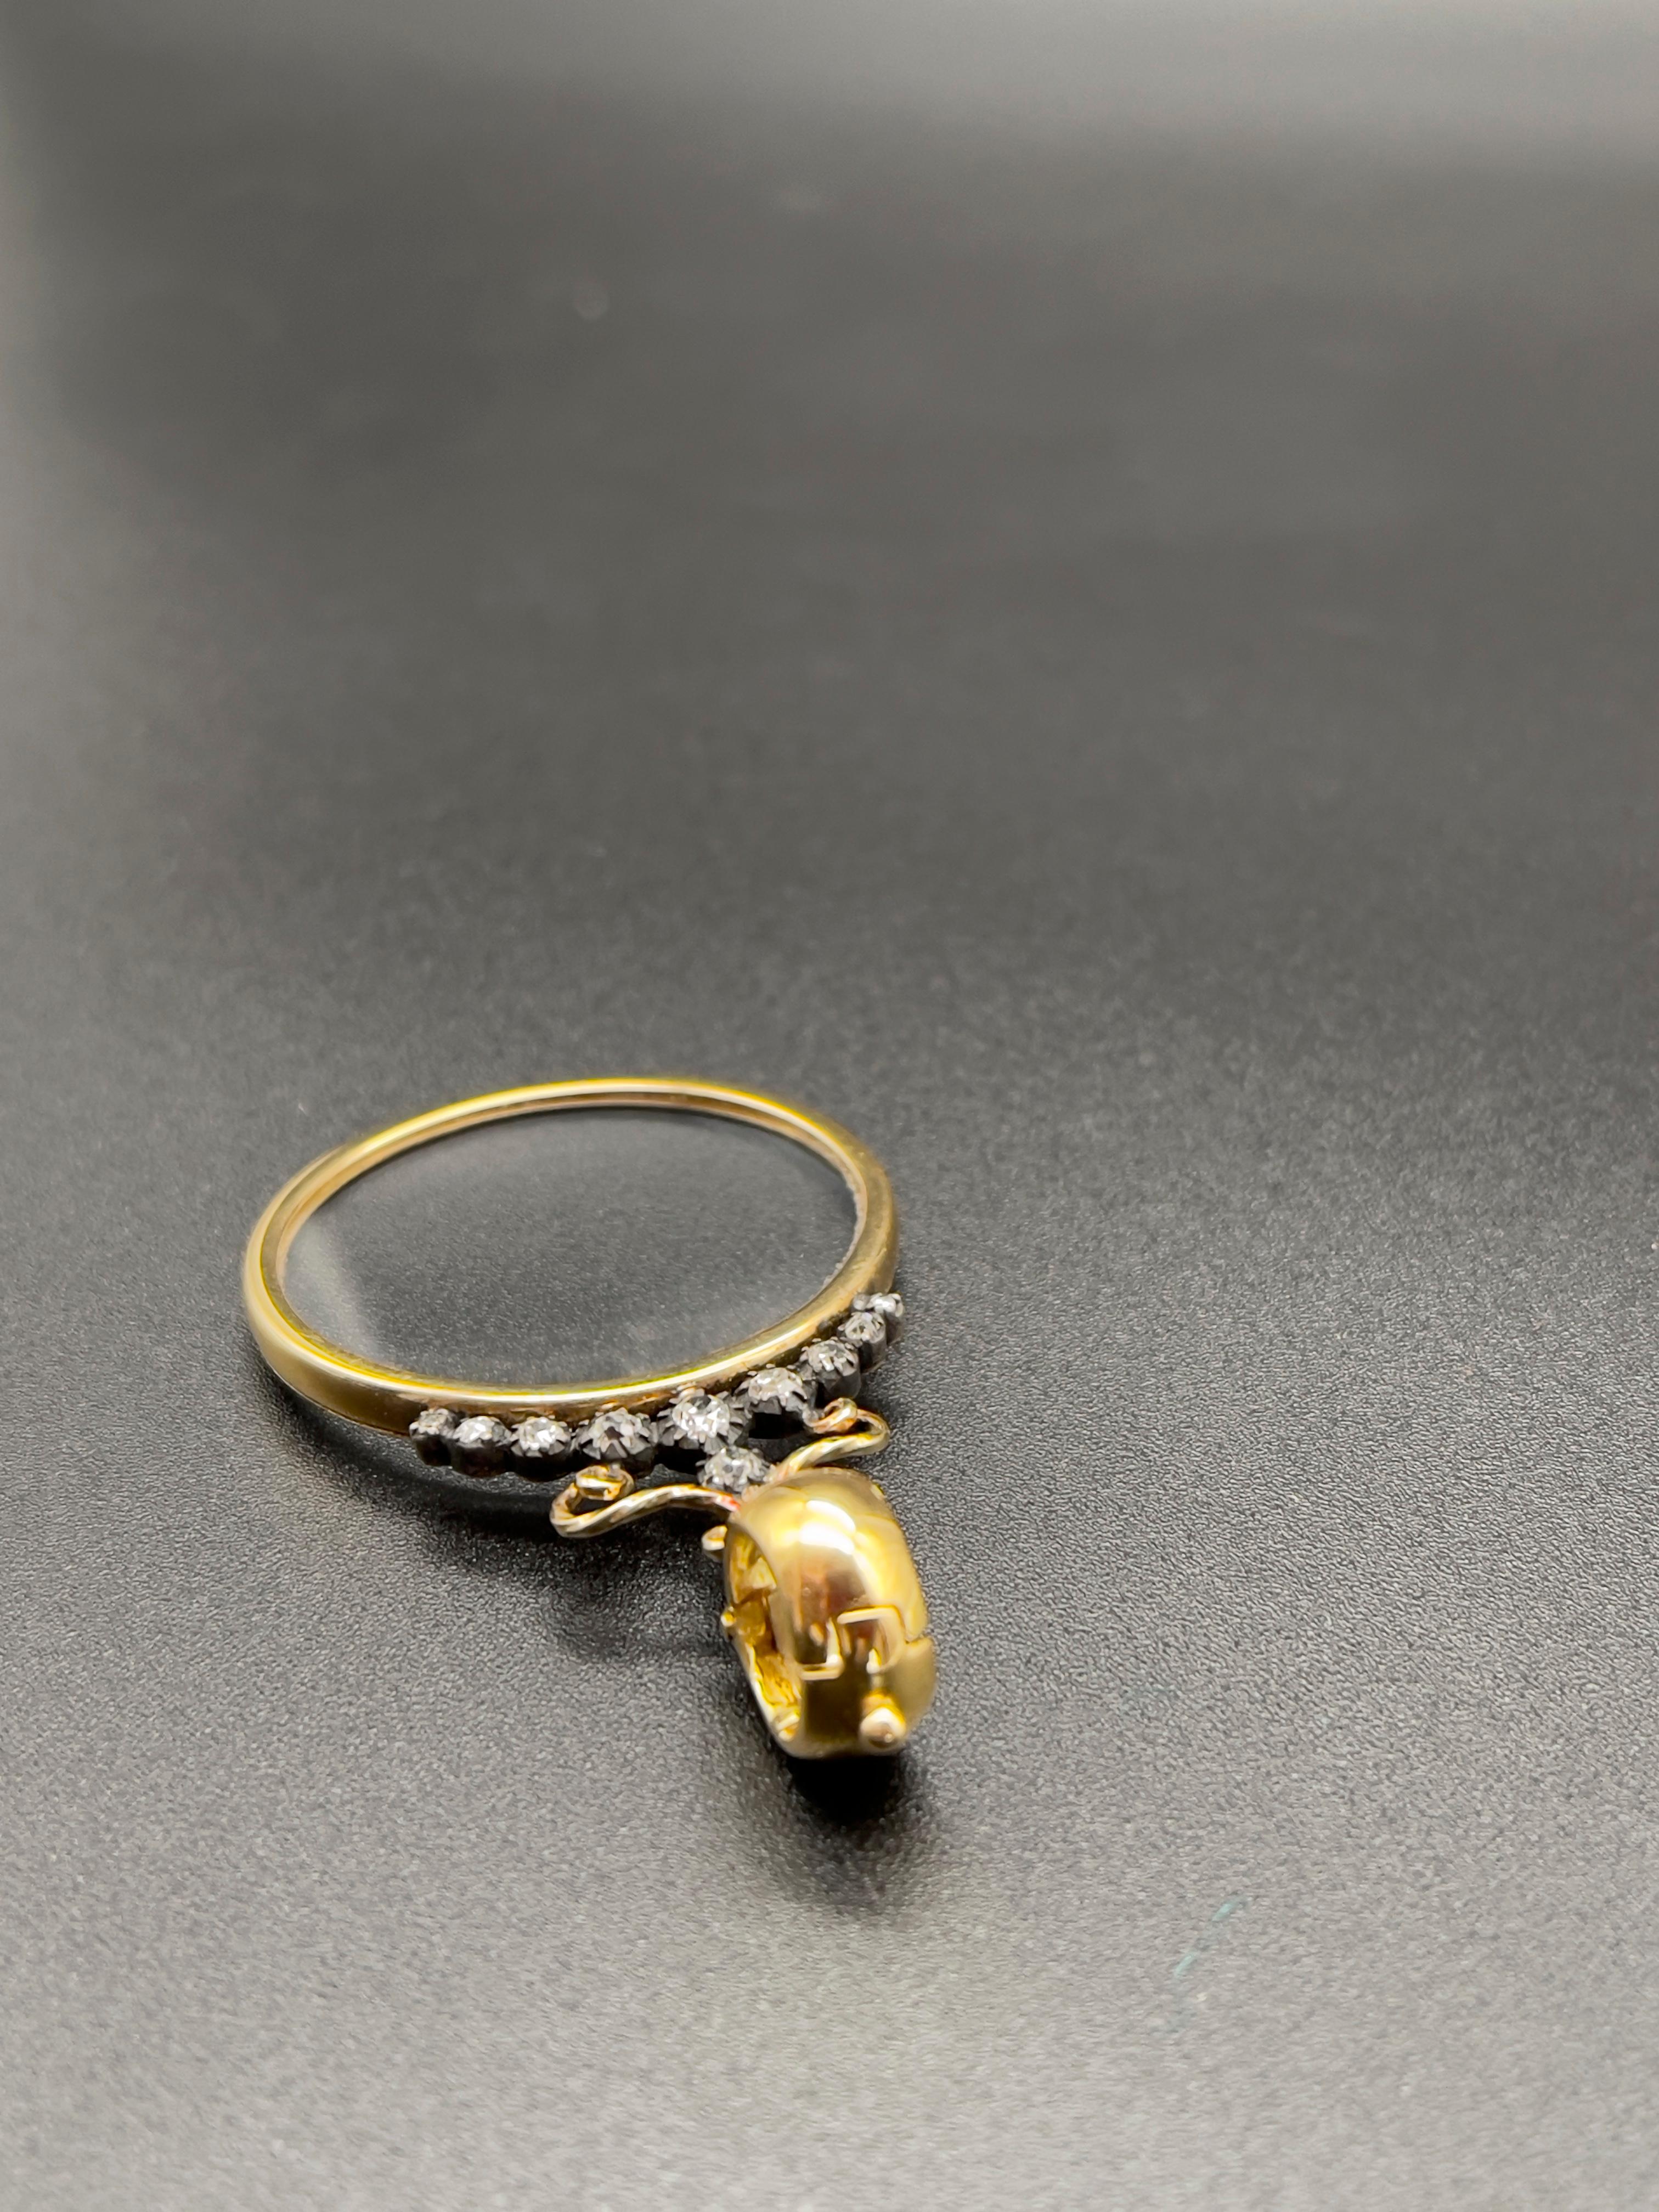 Brilliant Cut Victorian Monocle Magnifying Glass Diamonds Gold Pendant Necklace  For Sale